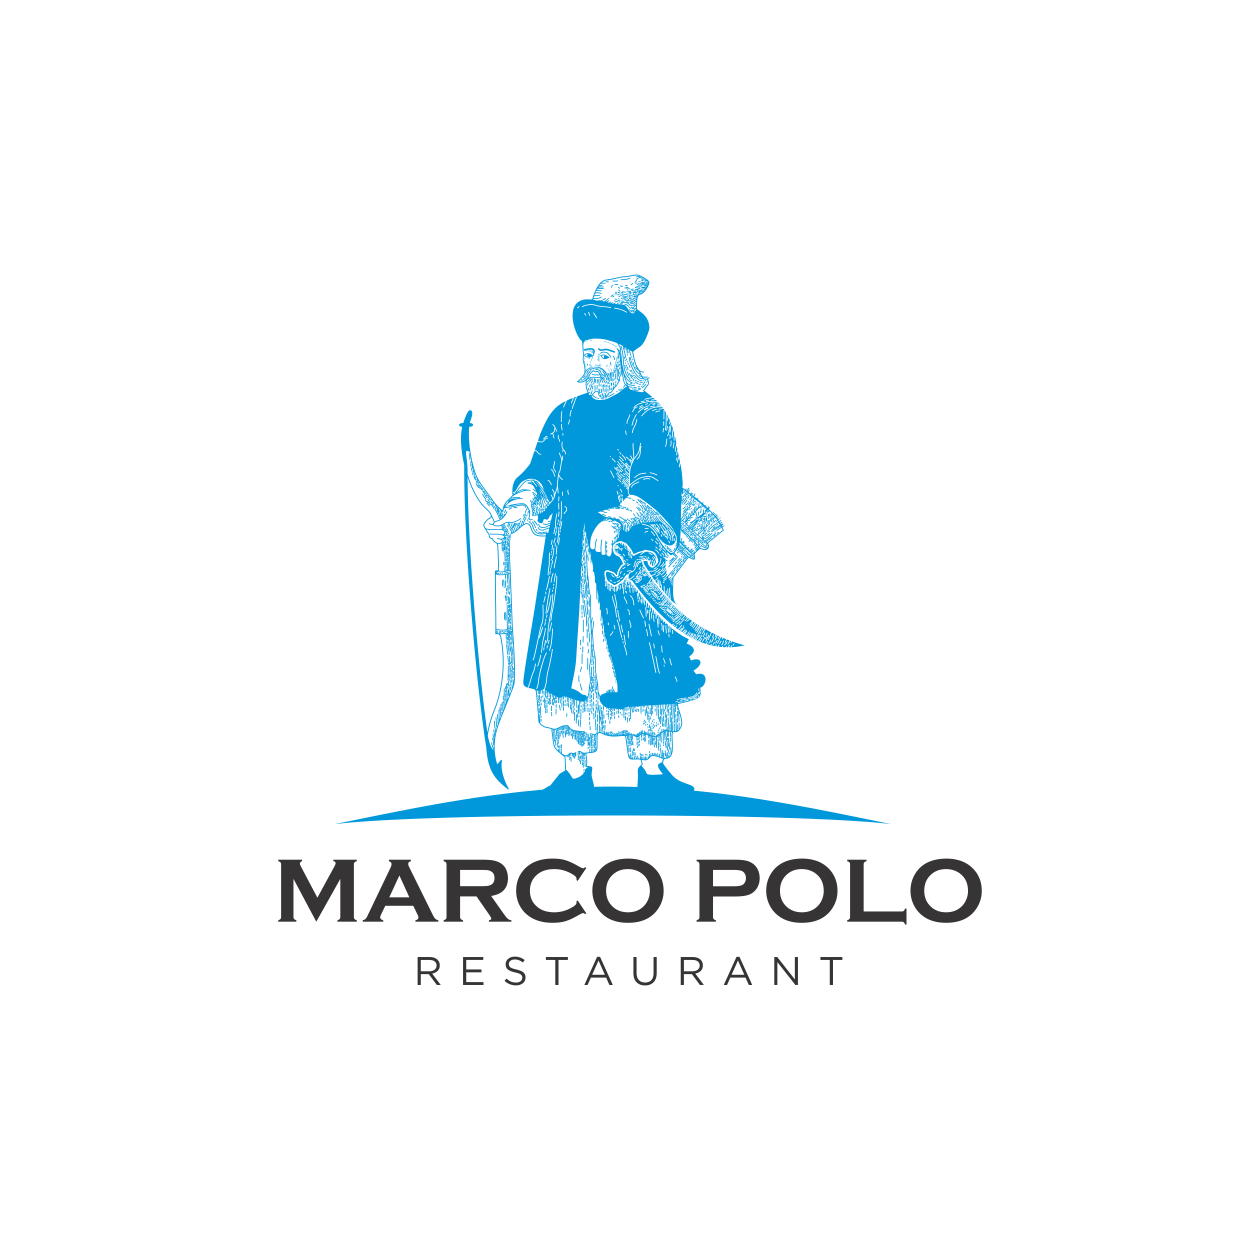 Marcopolo Logo - Upmarket, Elegant, Restaurant Logo Design for Marco Polo by -sevia